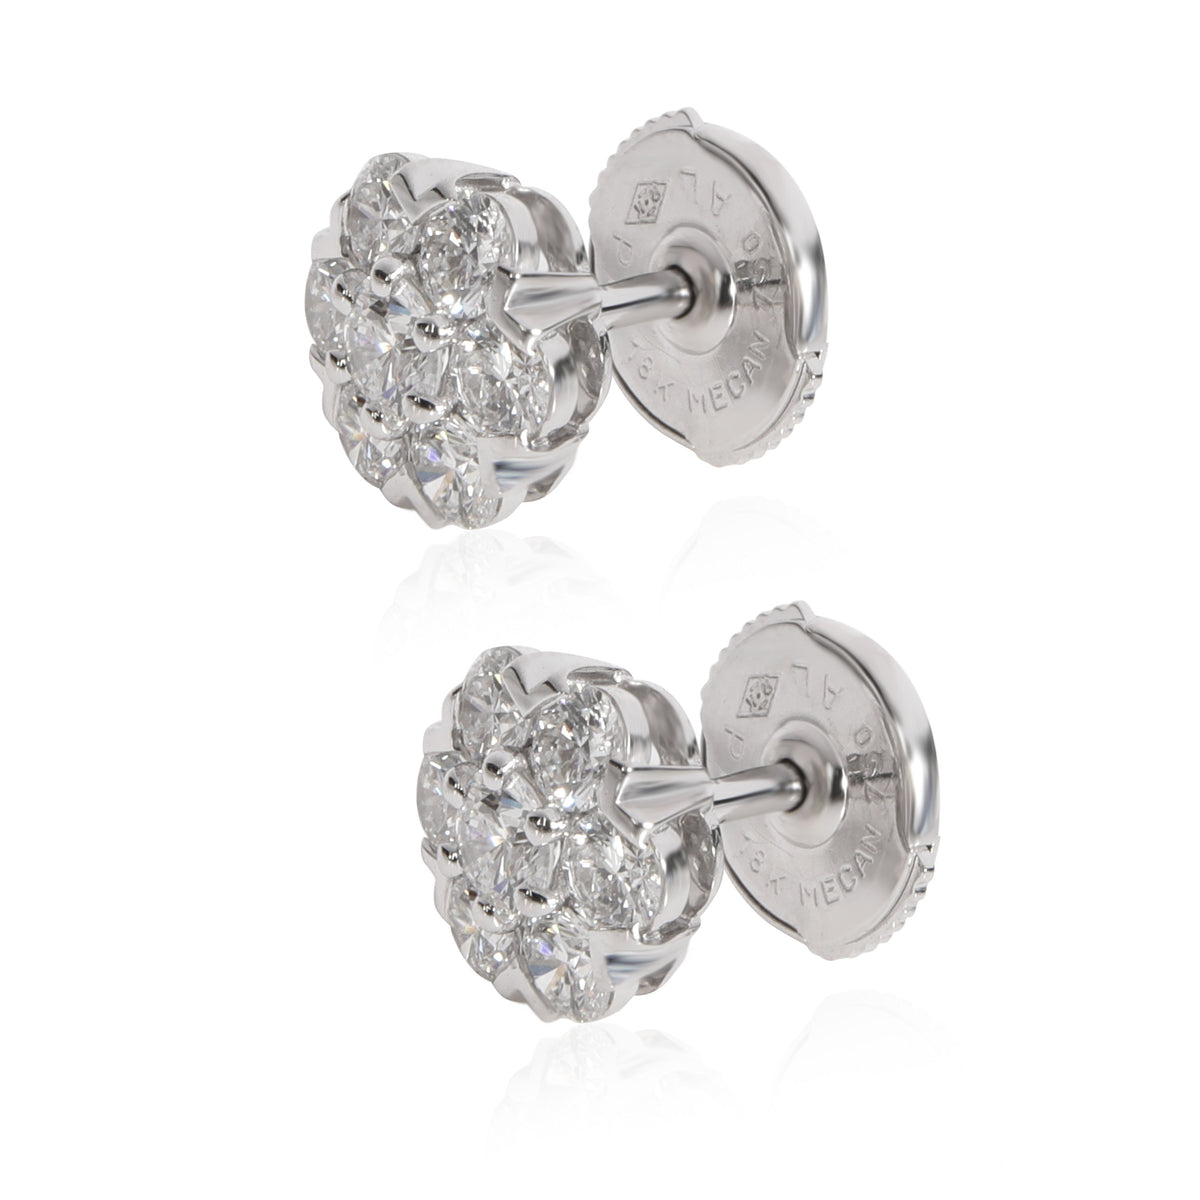 Van Cleef & Arpels Fleurette Diamond Earring in 18K White Gold 1.00 CTW